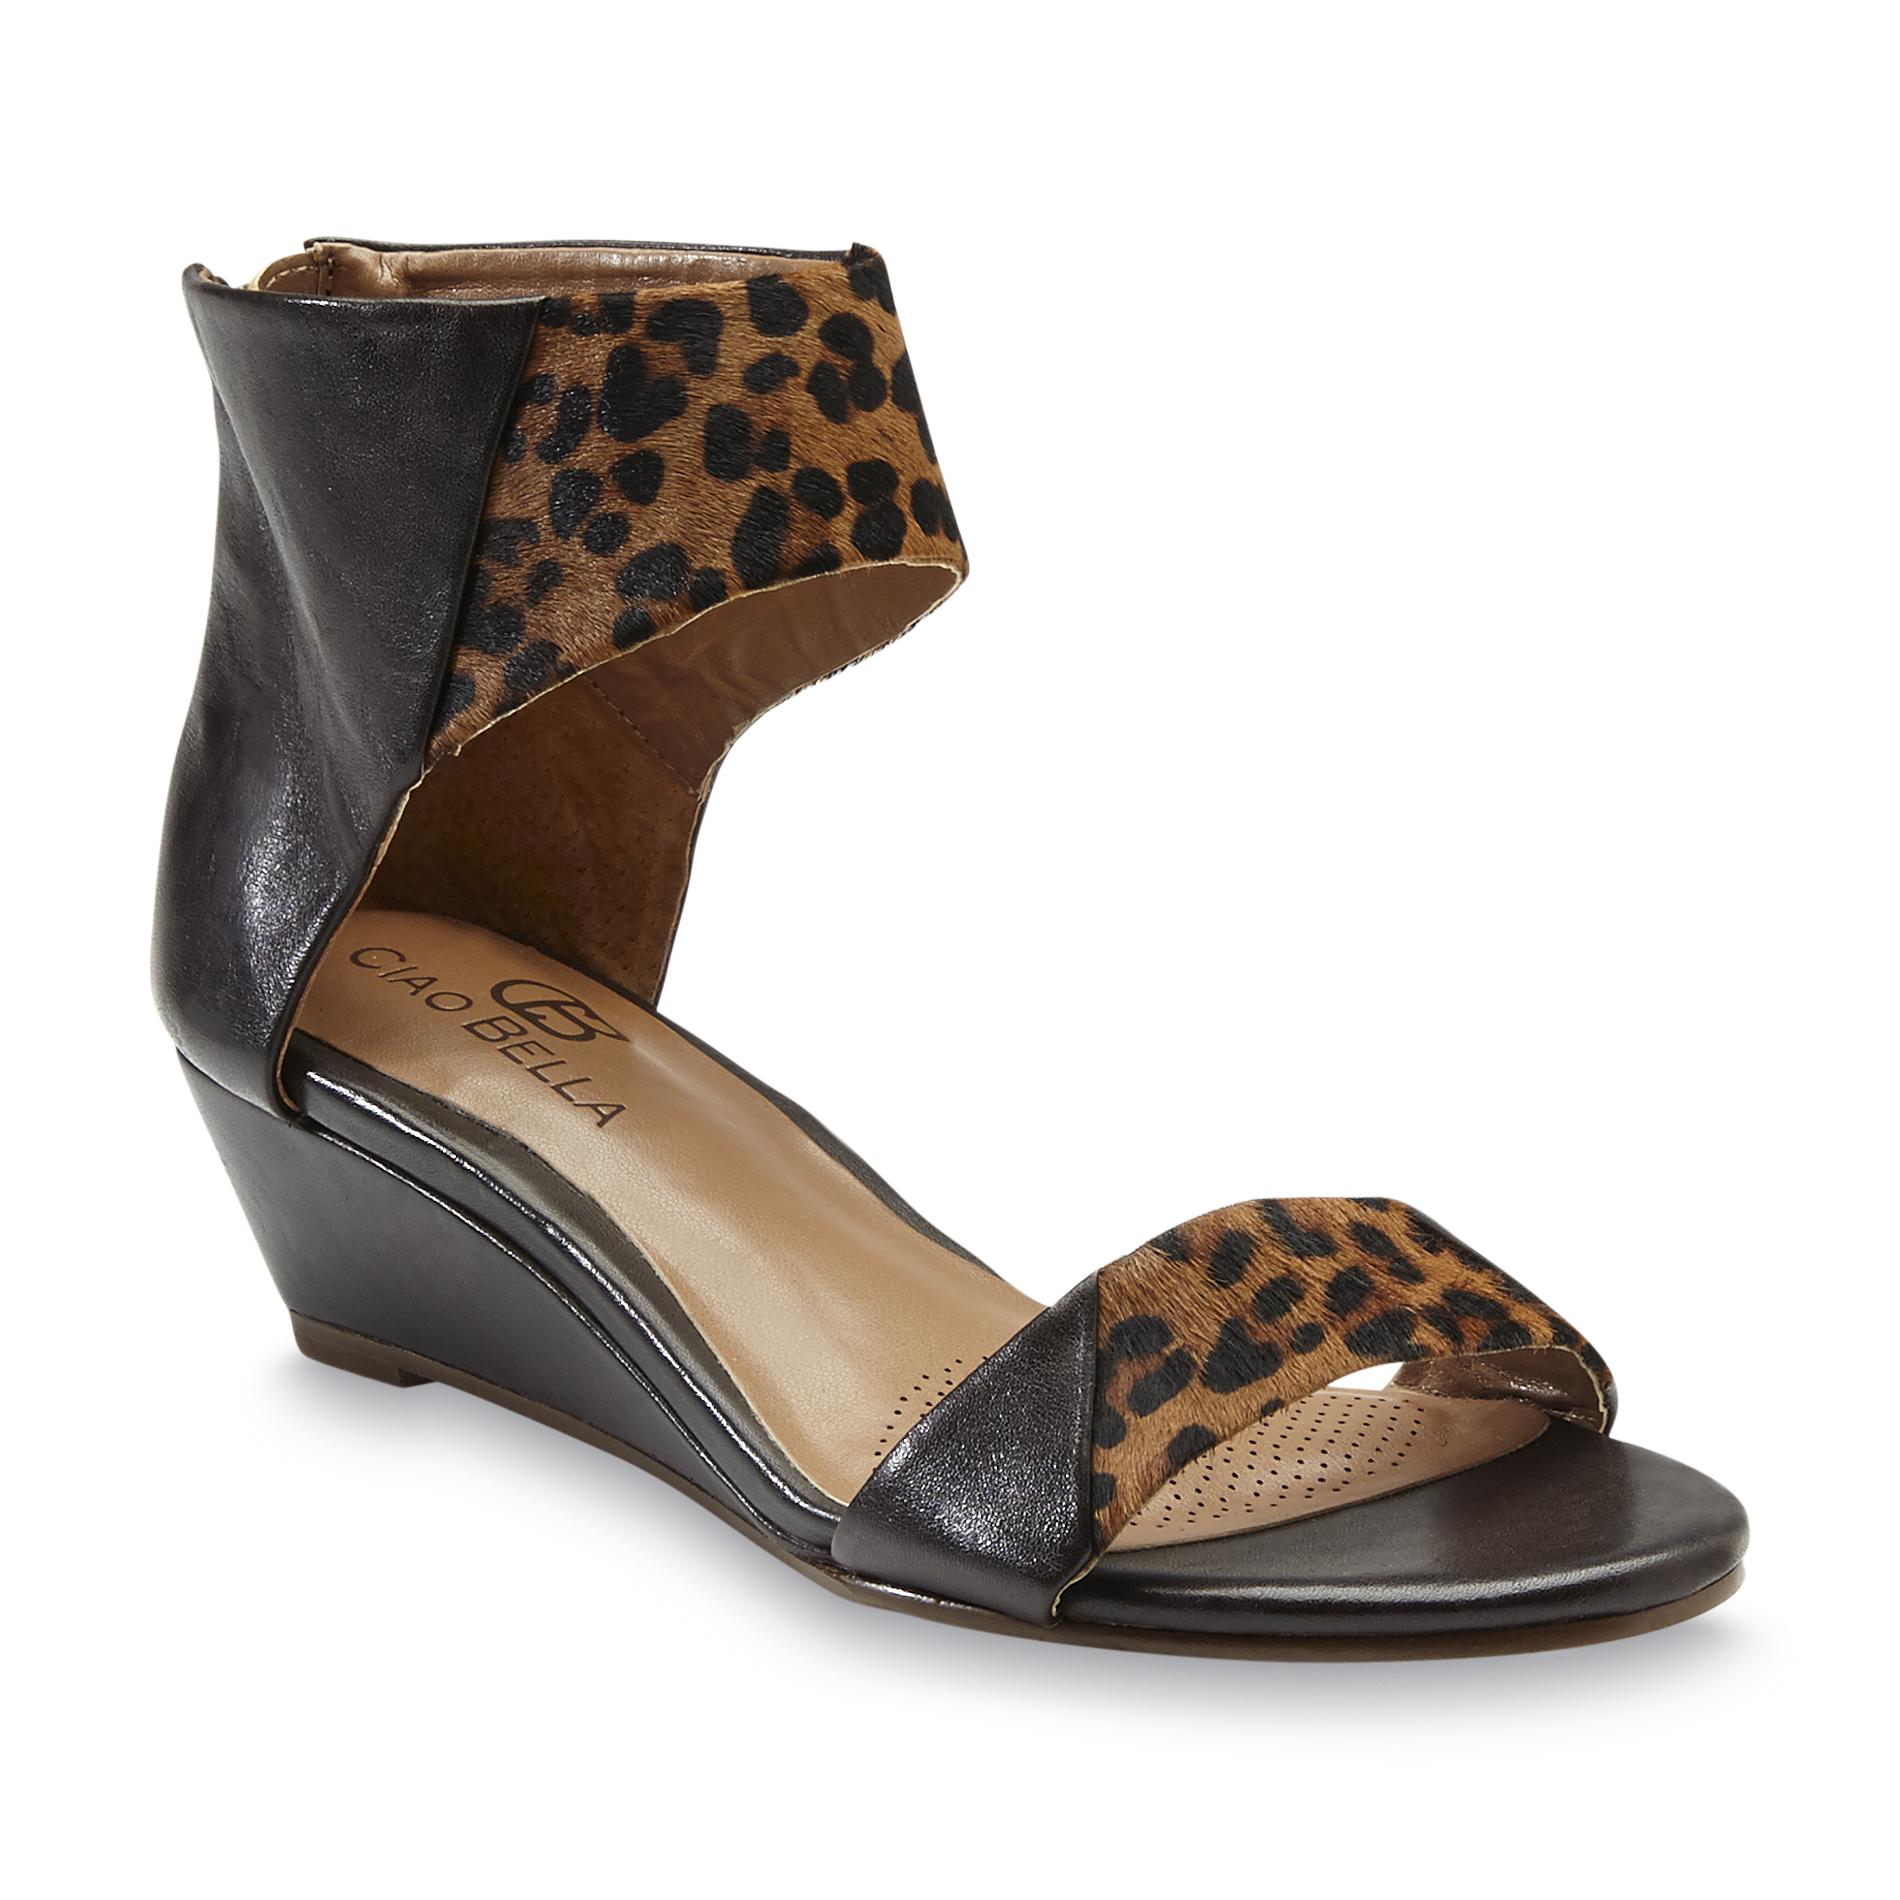 Ciao Bella Women's Whitney Brown/Leopard Wedge Sandal